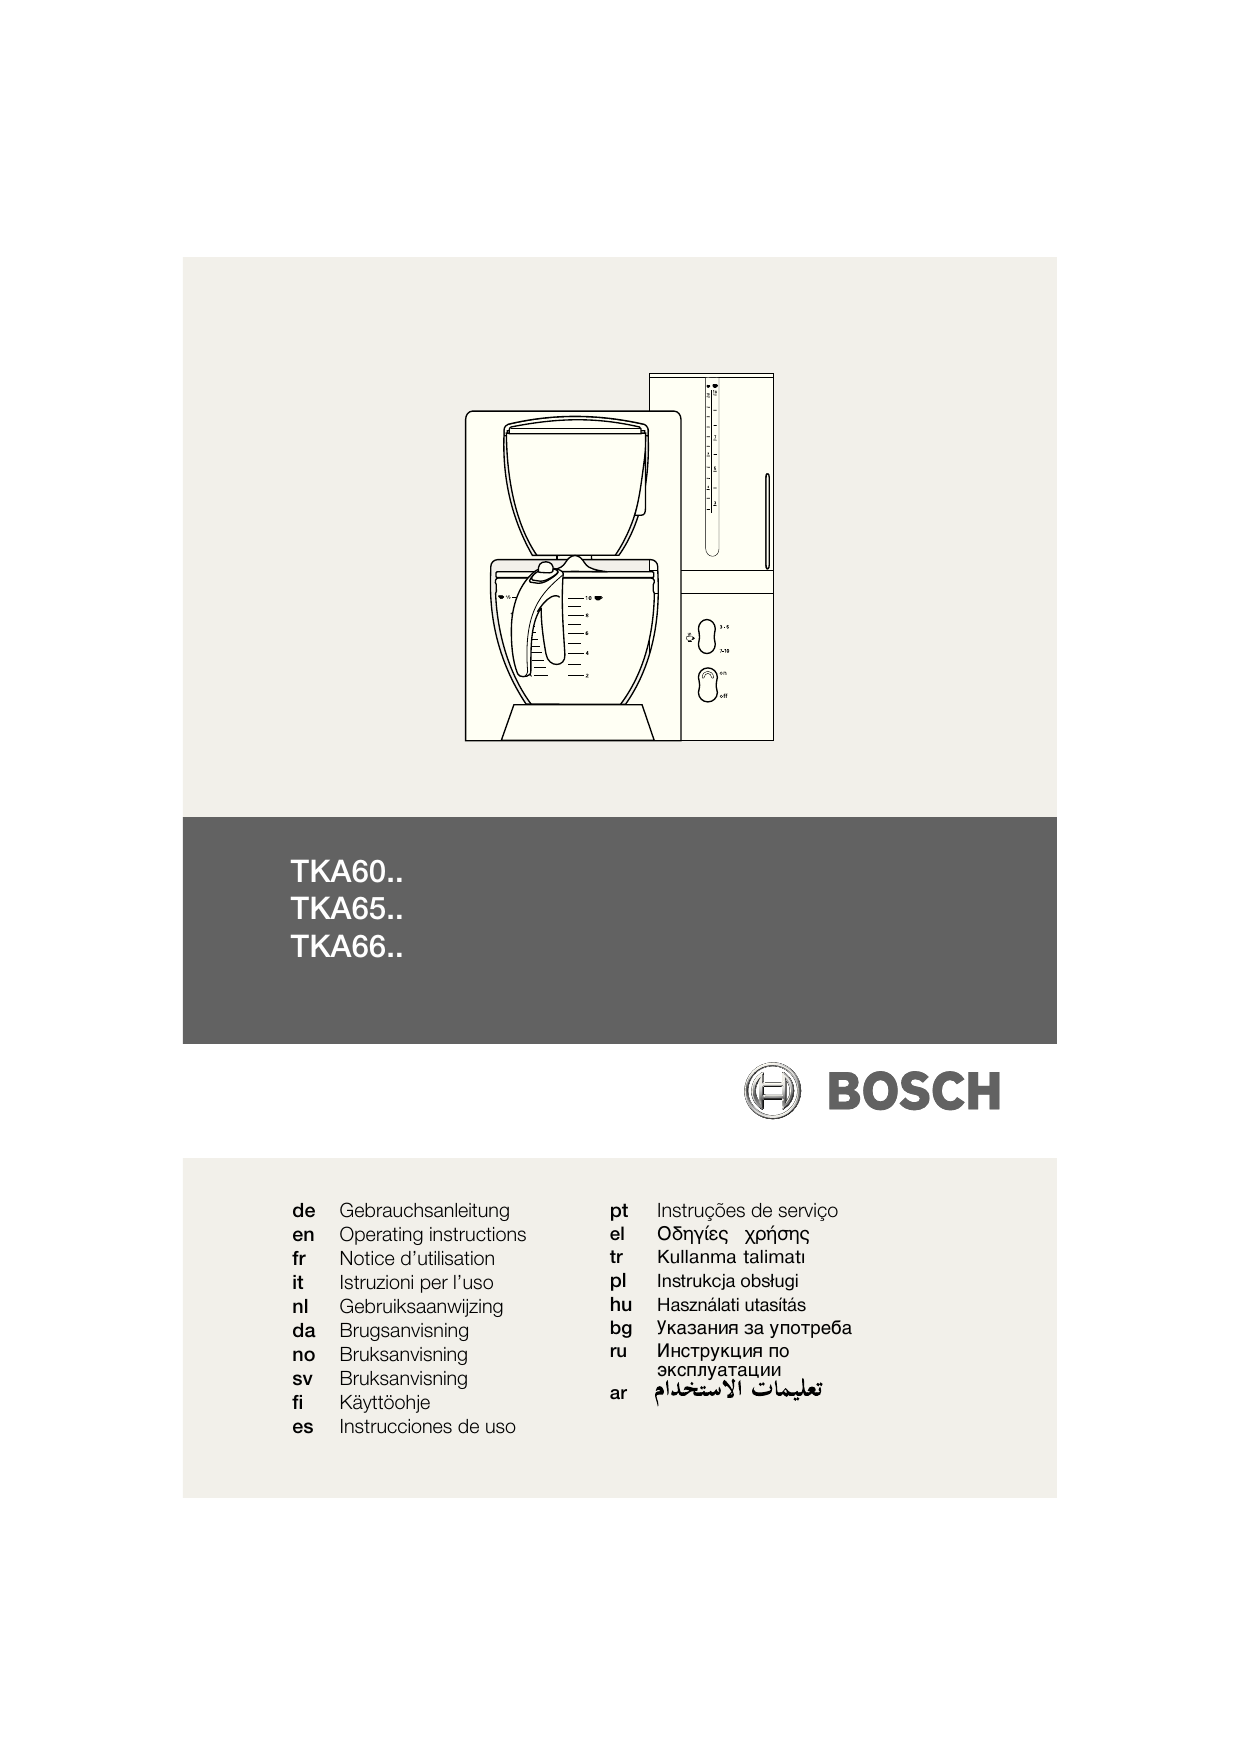 Bosch Tka6024 02 Tka6003 Tka6644 02 Tka6621 01 Tka6631 01 Tka662p1 01 Tka6634 01 Tka6501 01 Tka6031 03 Tka6621gb 01 Instruction Manual Manualzz